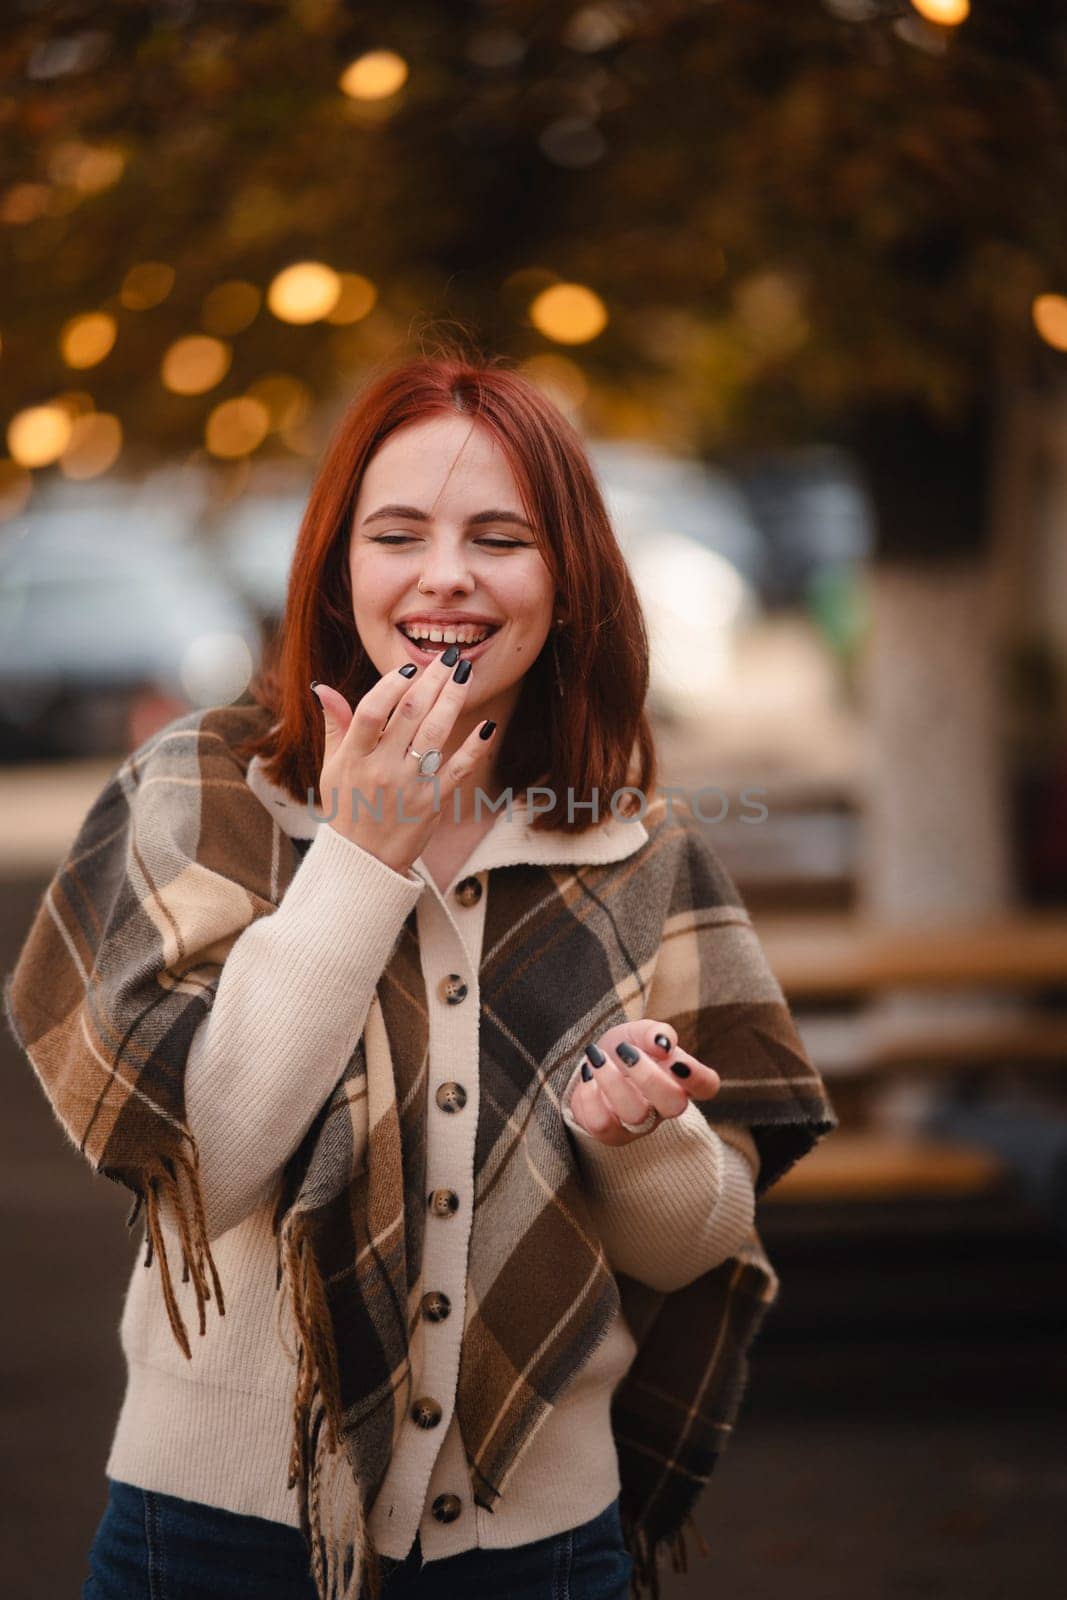 A cheerful redhead beams with joy on the streets of the autumn city. by teksomolika